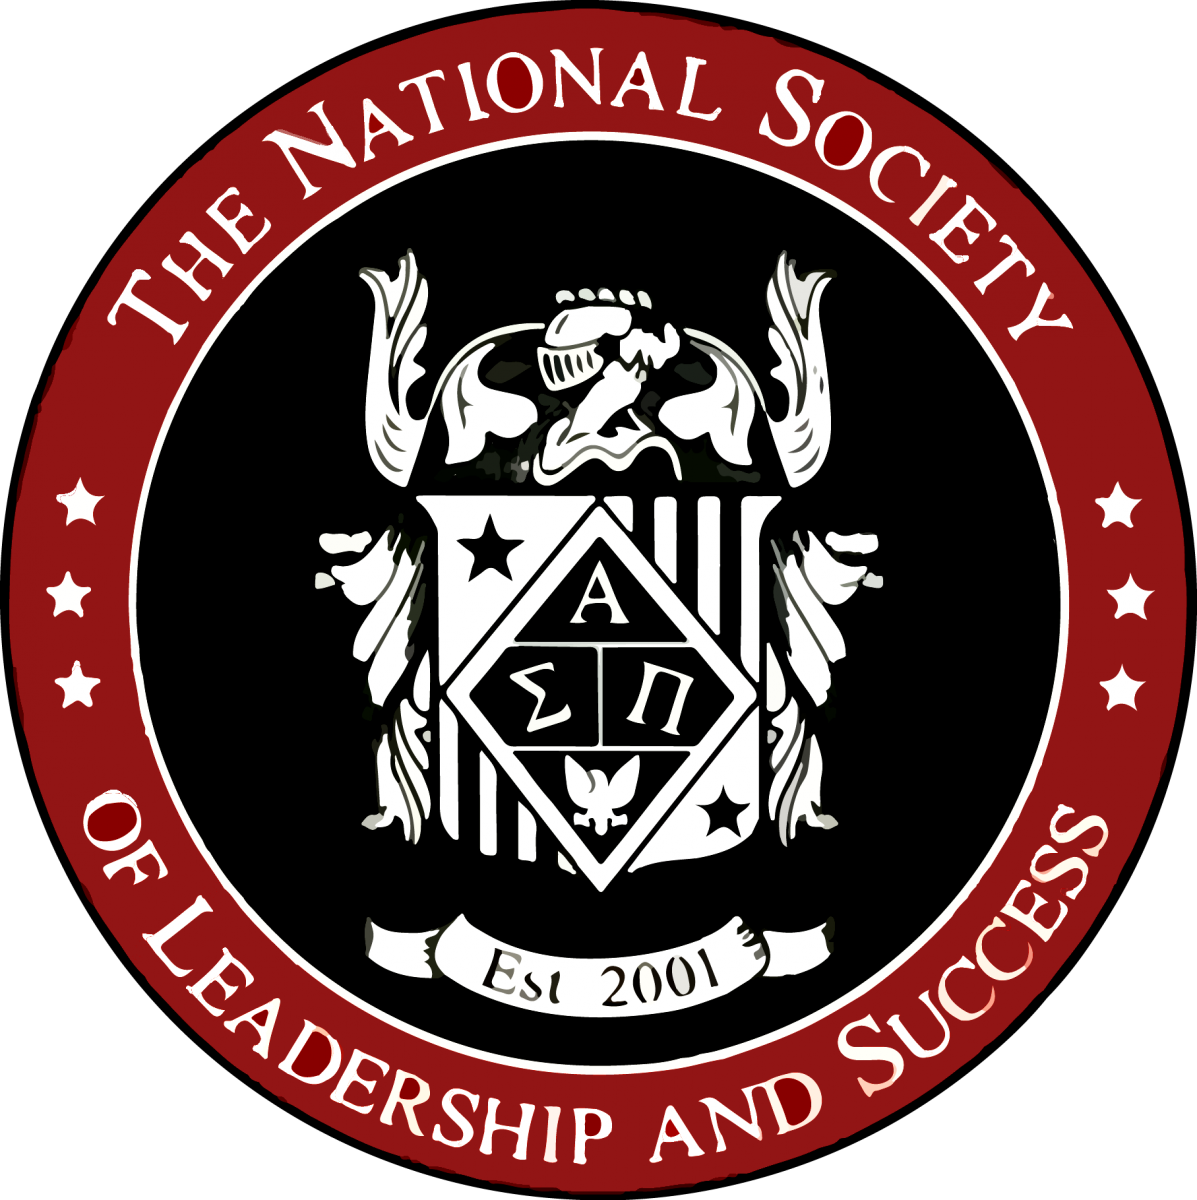 NSLS logo